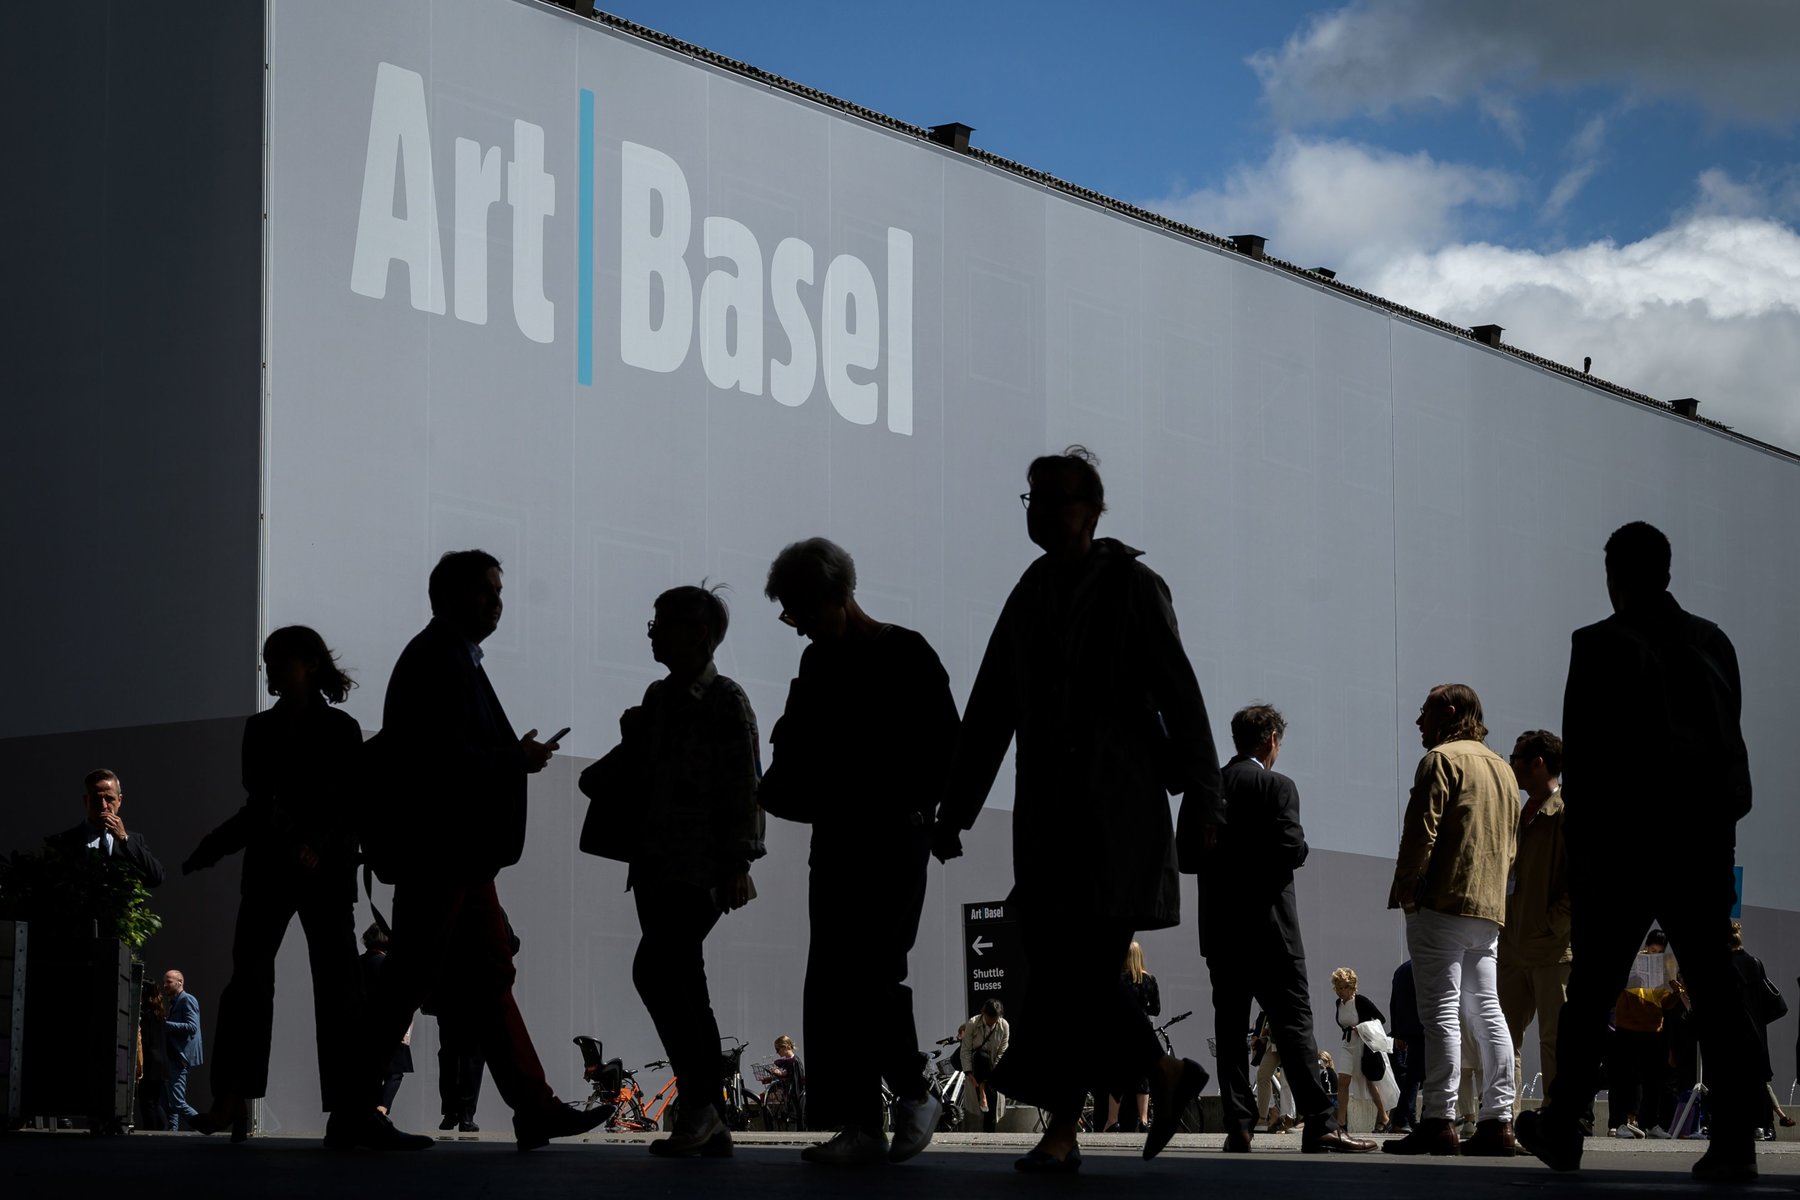 Art Basel is Launching Digital Viewing Rooms art basel Art Basel is Launching A Virtual Show merlin 156341331 73c055b0 7346 4da7 9efc 96364794a155 mobileMasterAt3x 504x336